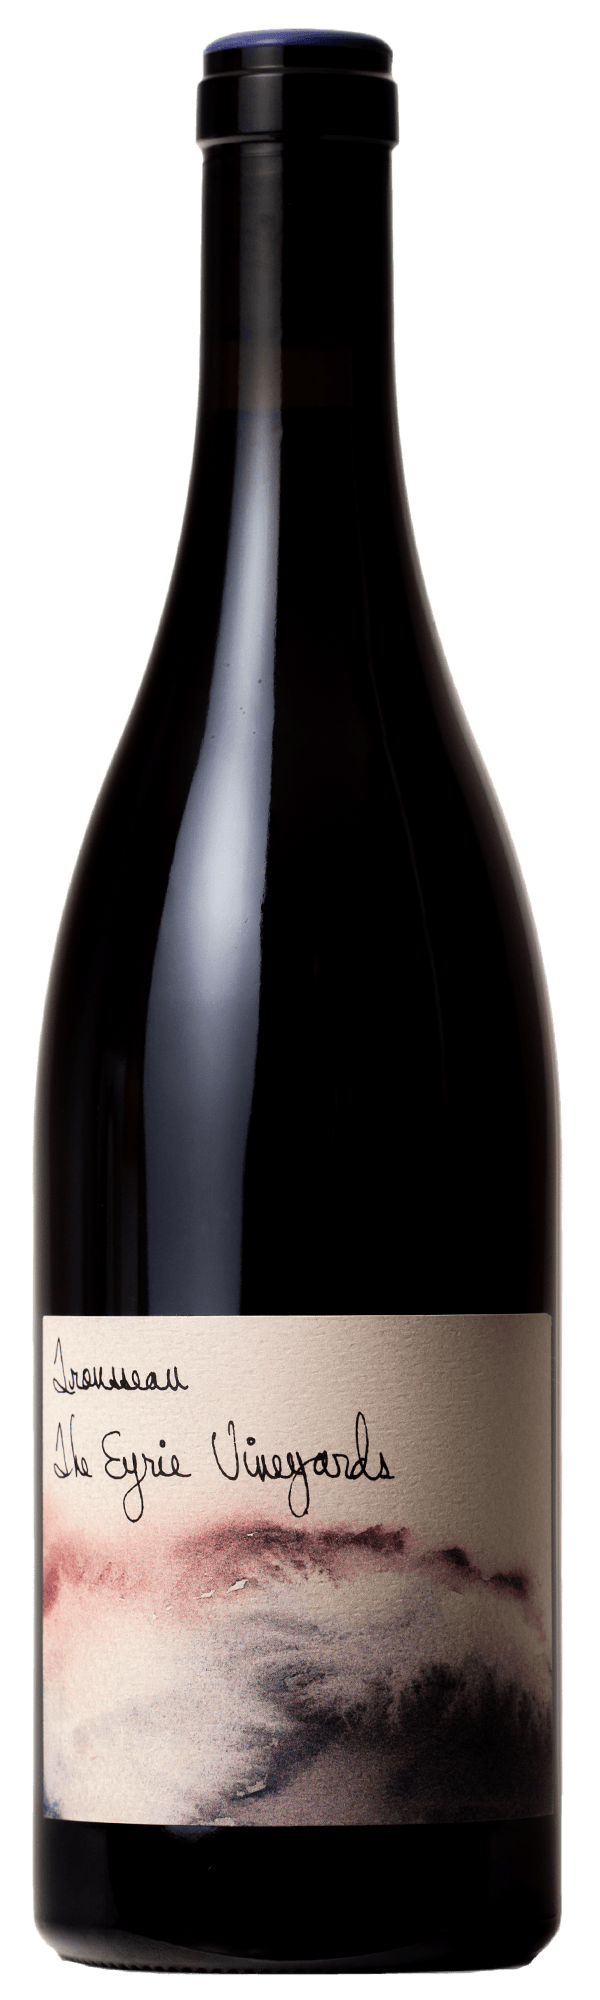 The Eyrie Vineyards Trousseau 2017 bottle